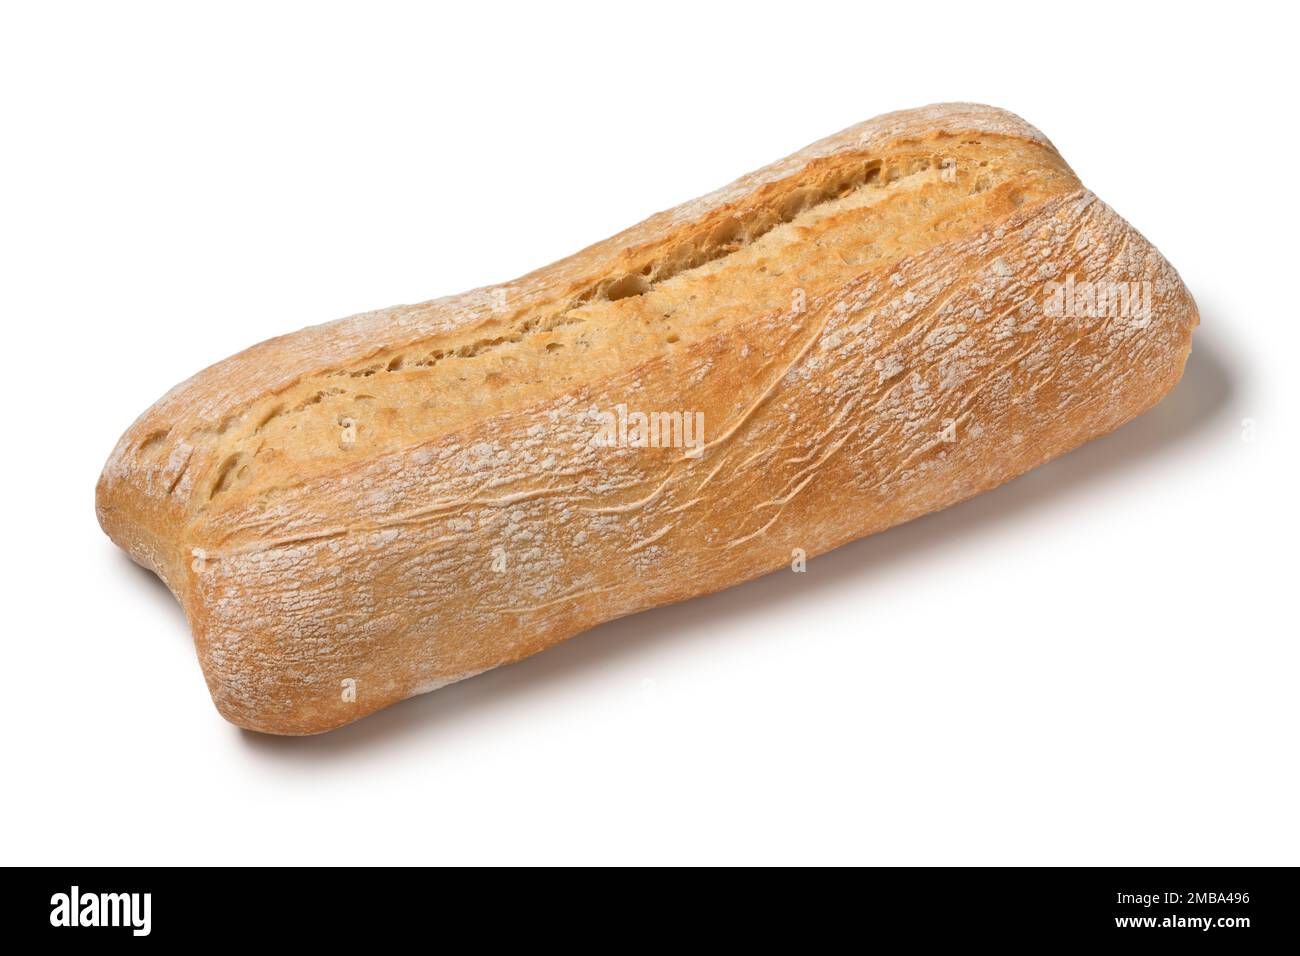 Traditional Italian whole fresh baked ciabatta bread isolated on white background close up Stock Photo